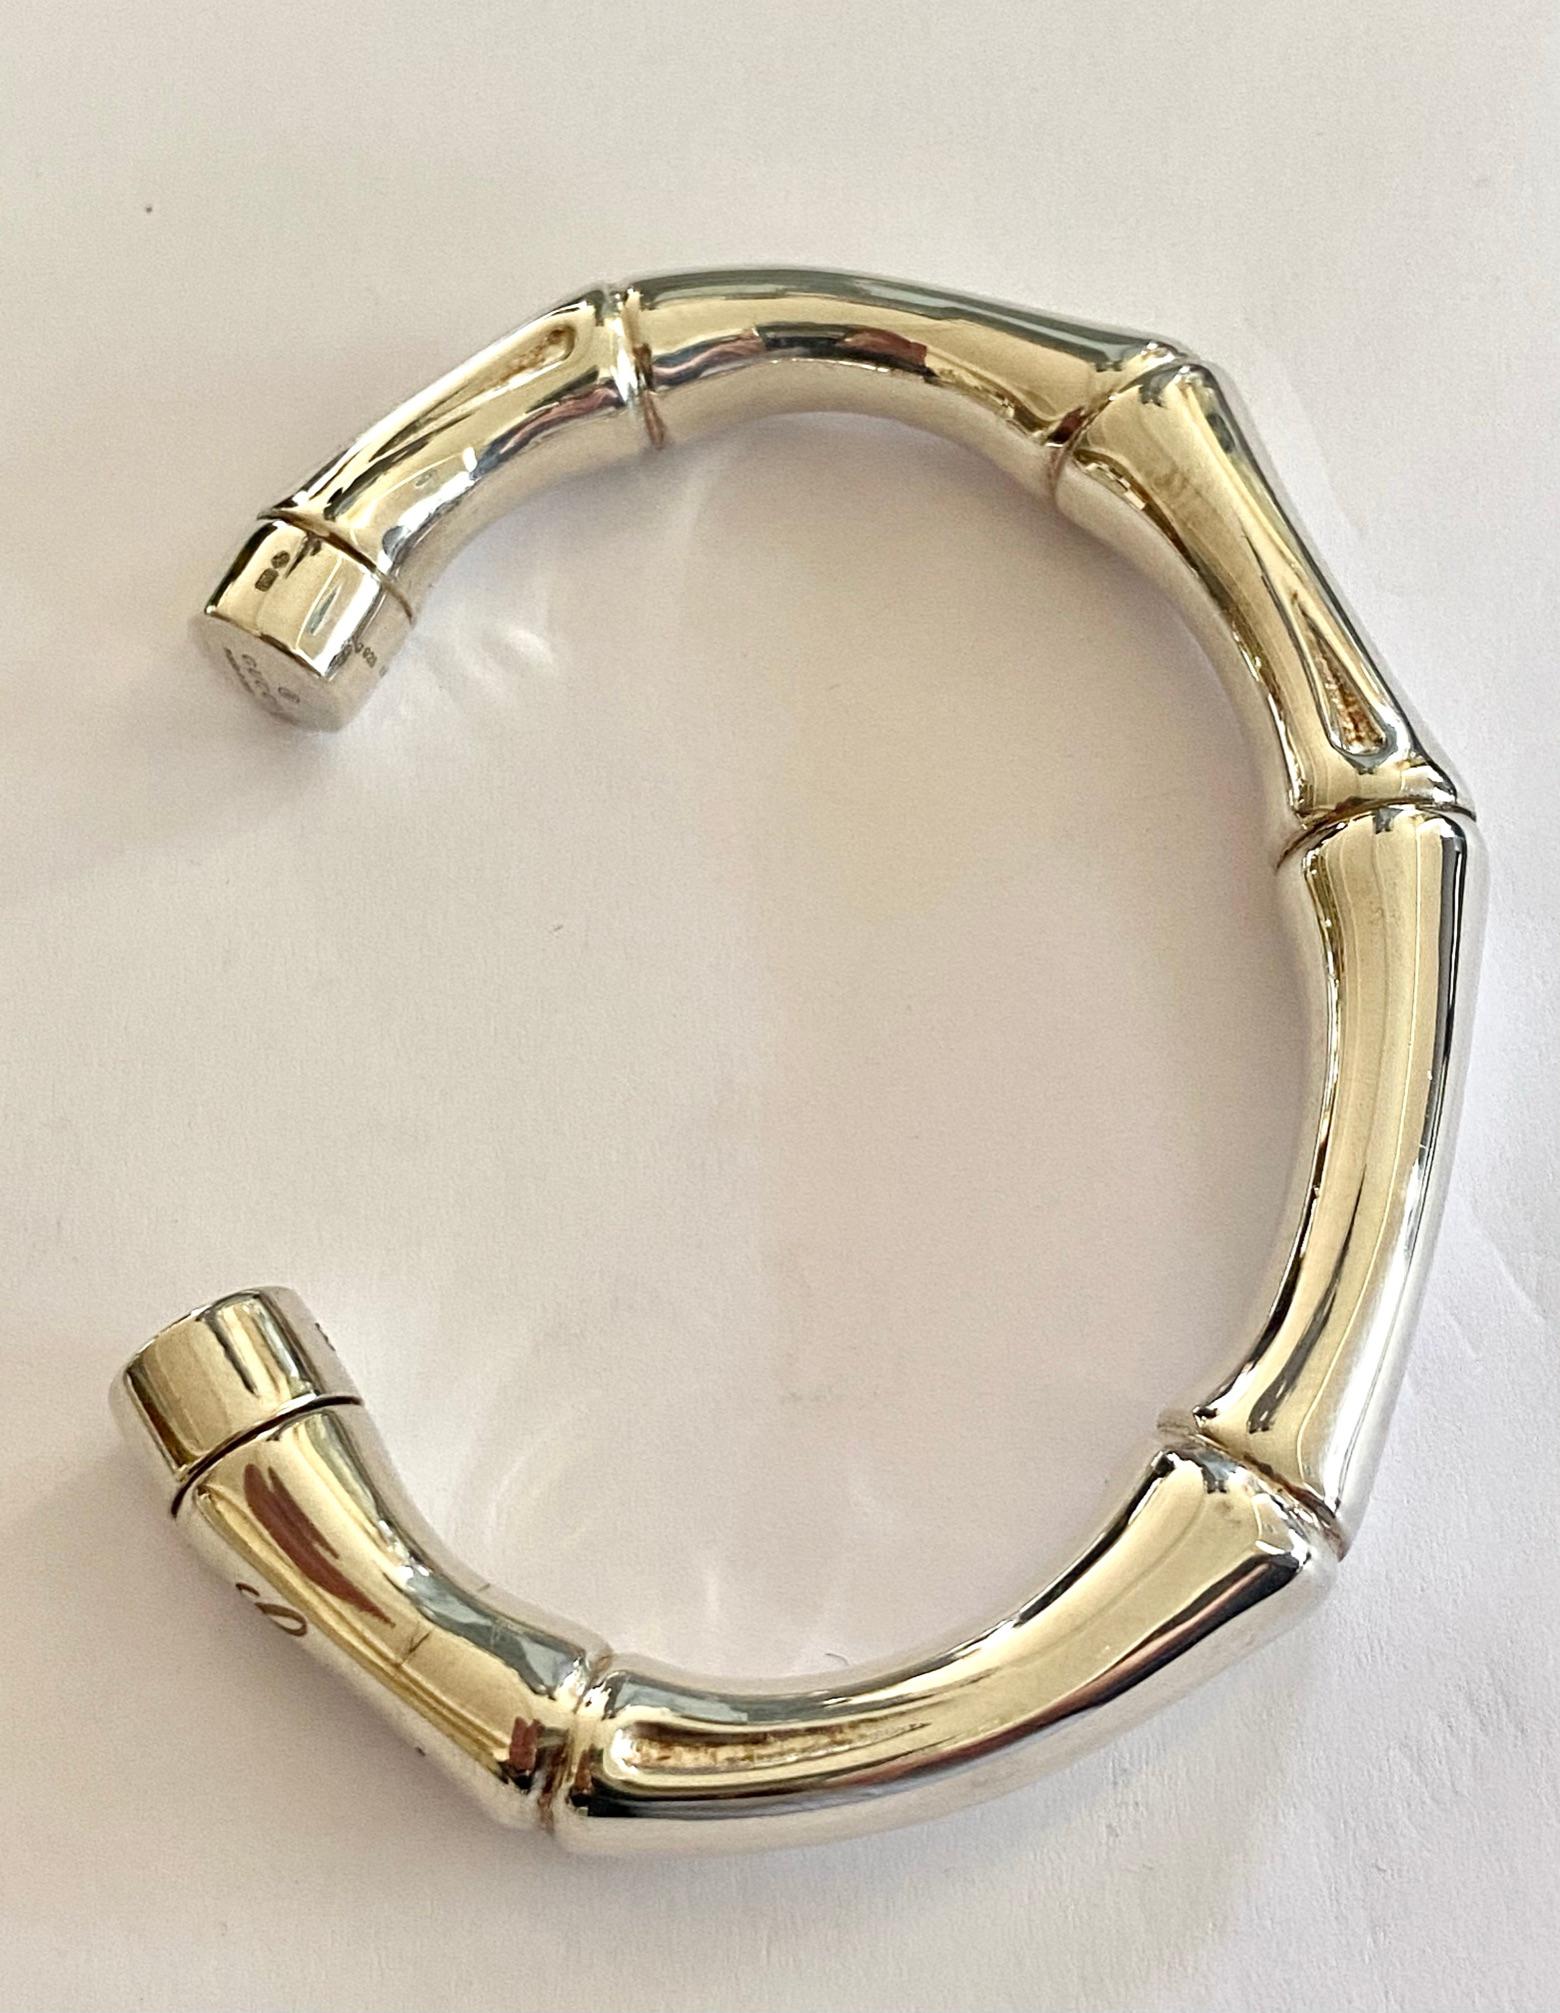 One (1) 925 / - sterling silver clip bracelet
signed: Gucci
Model: 